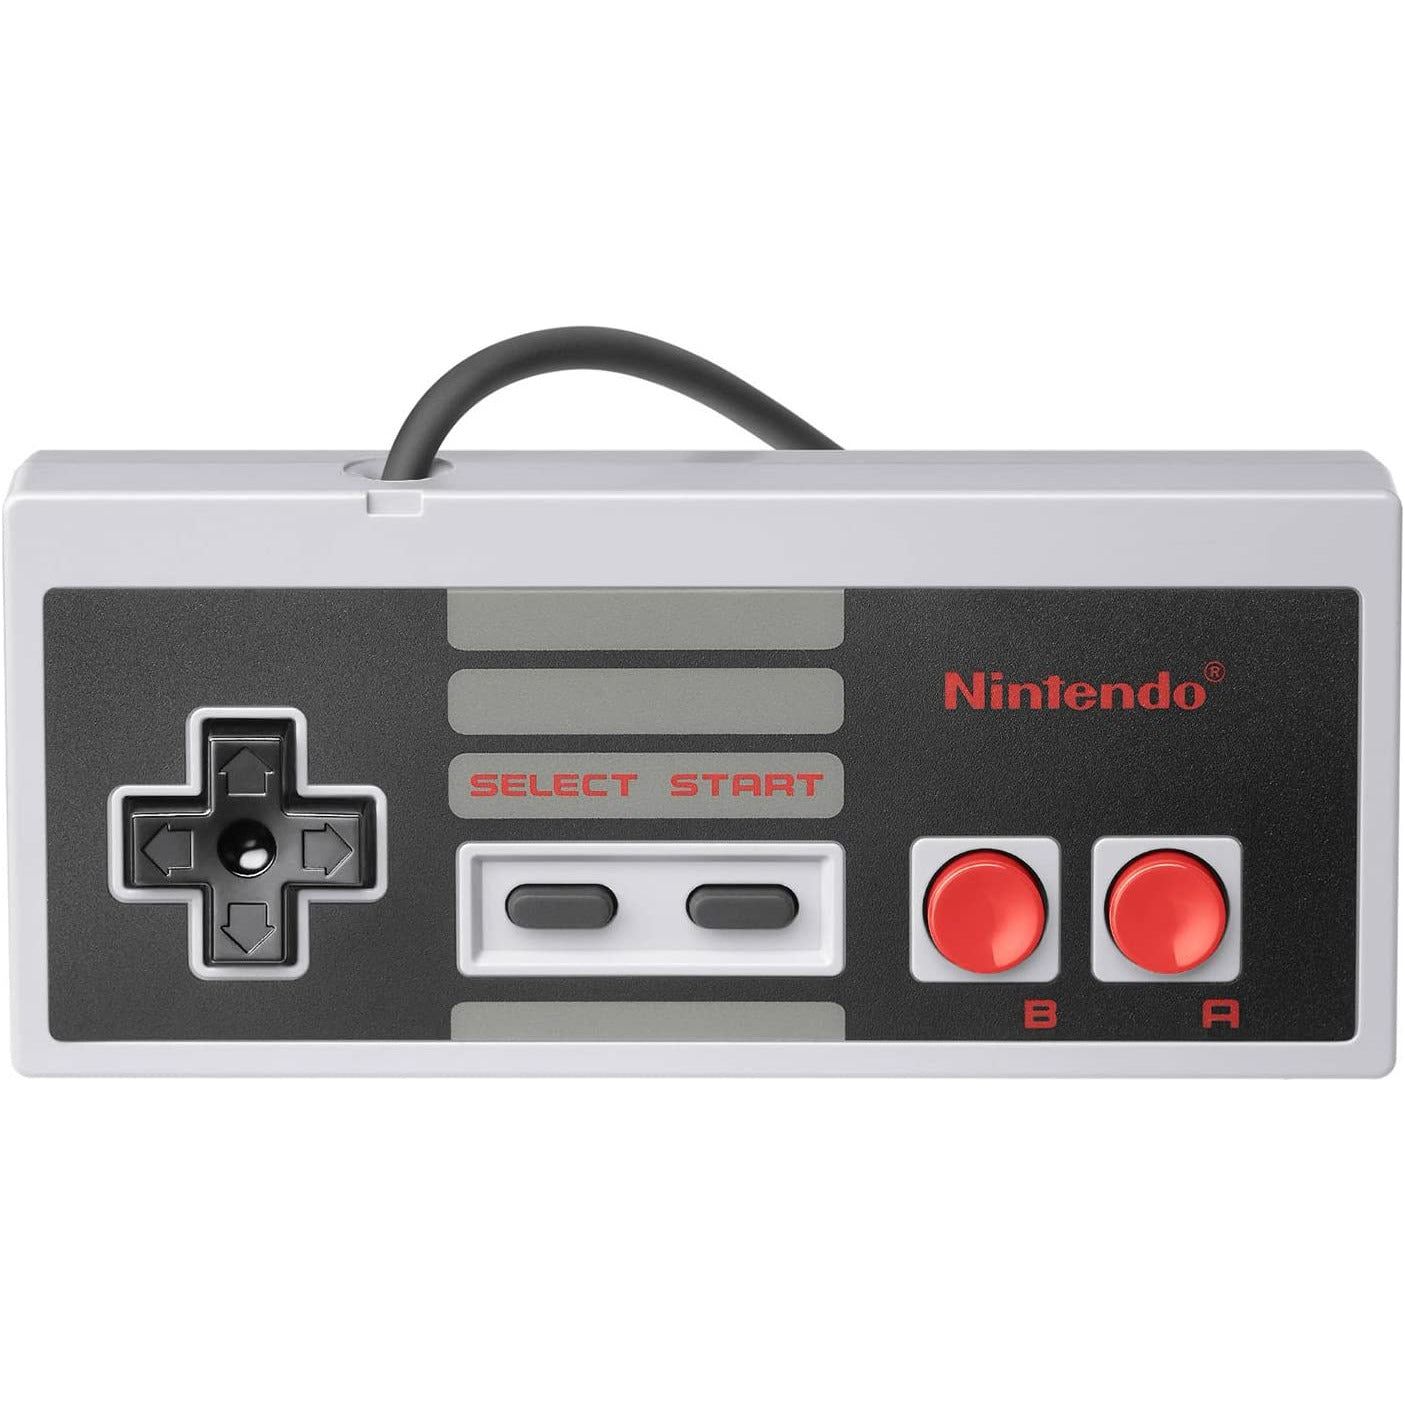 Nintendo Branded Nintendo Entertainment System Controller